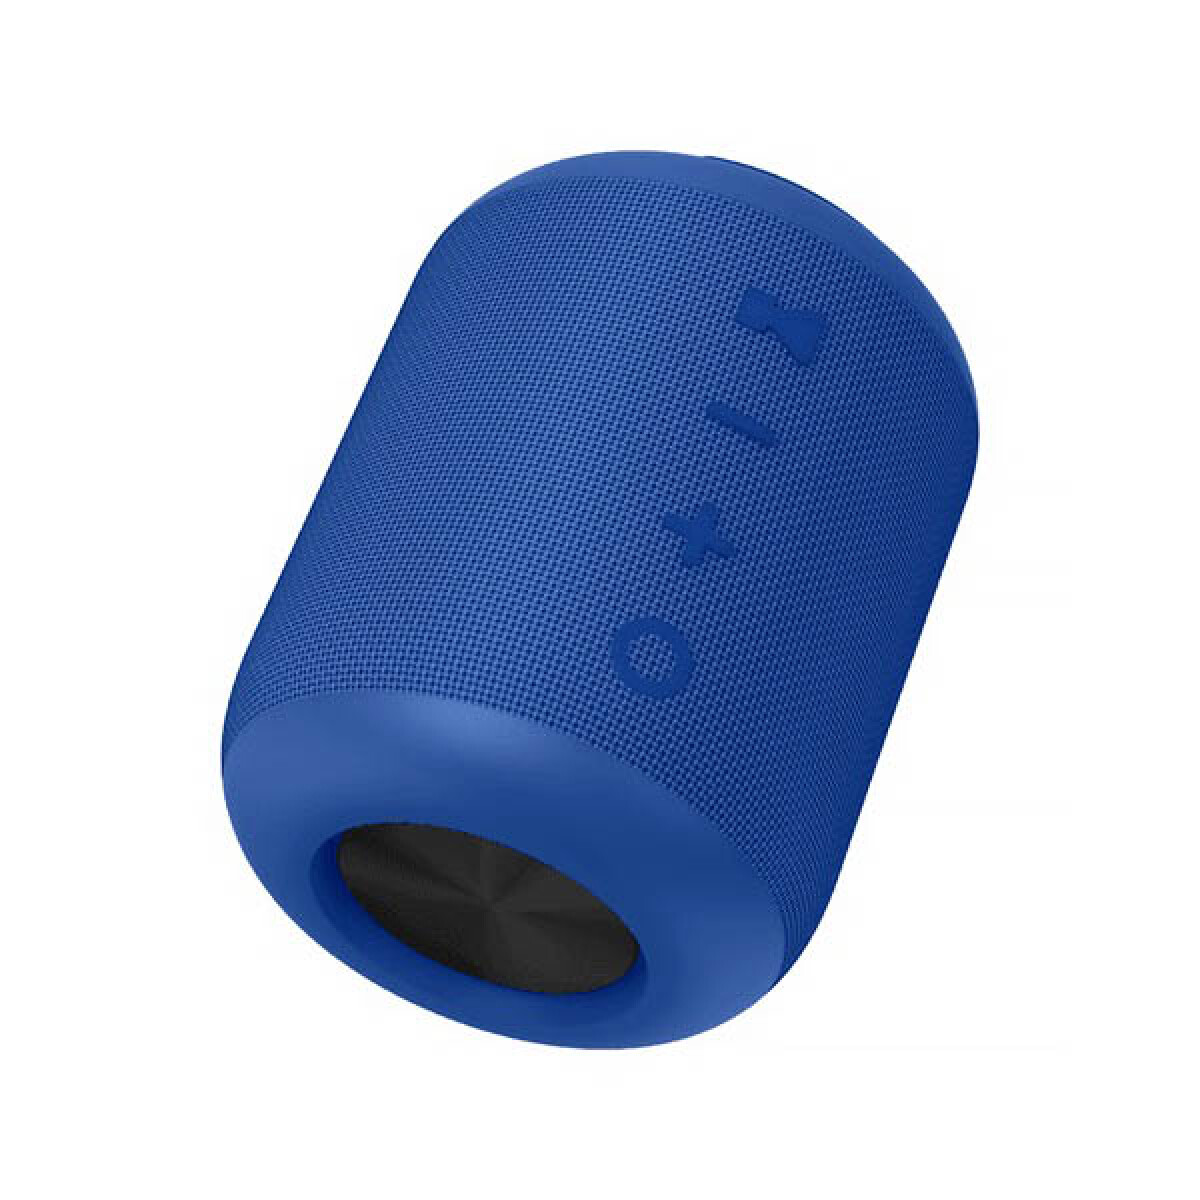 Parlante inalámbrico Bluetooth KlipXtreme Titan - Azul 